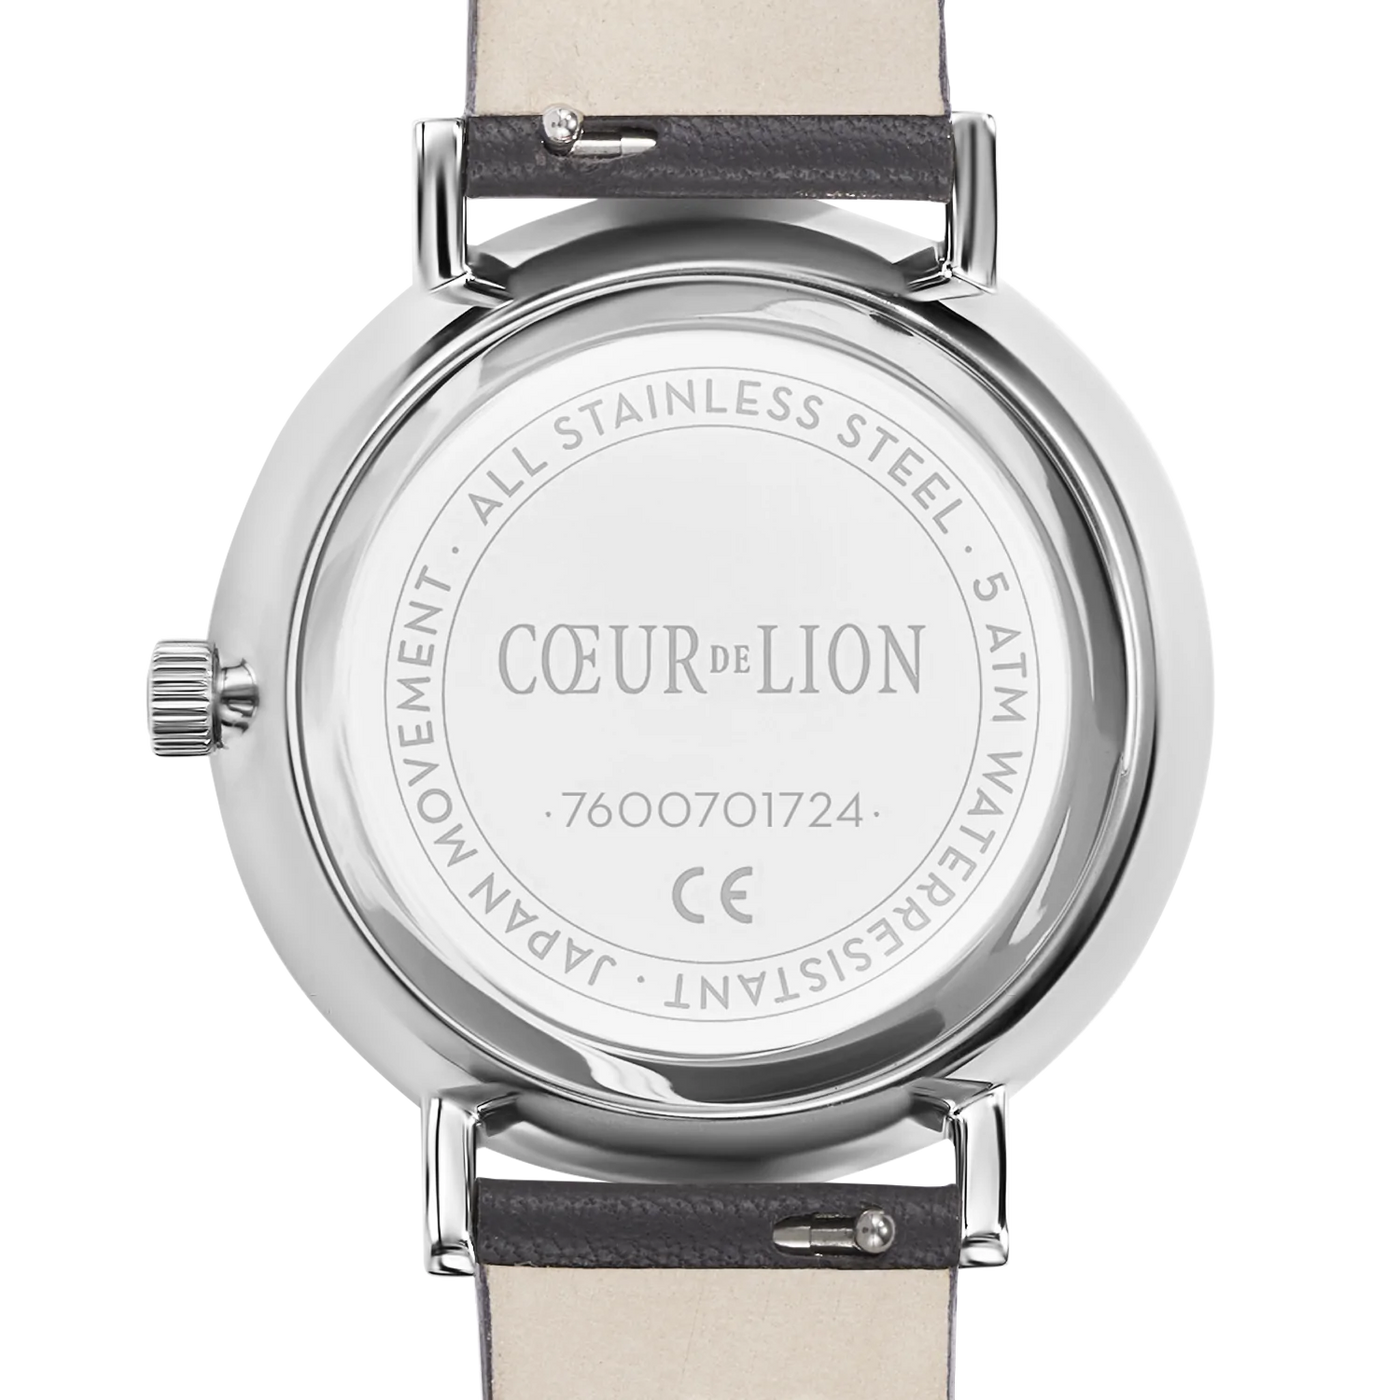 Coeur De Lion Anthracite Silver Watch